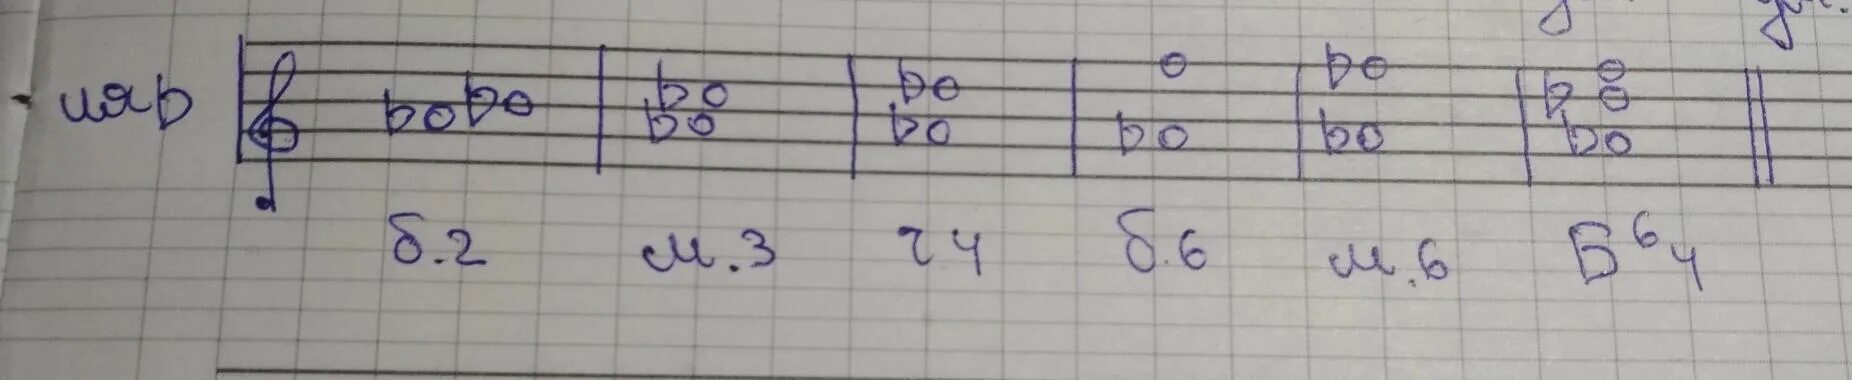 Б6 от ля бемоль. Построить от звука ля: б3 м3 б2 ч4 м53 б53. От ля бемоль б6 м6 б64 м64. От звука ля построить м6.